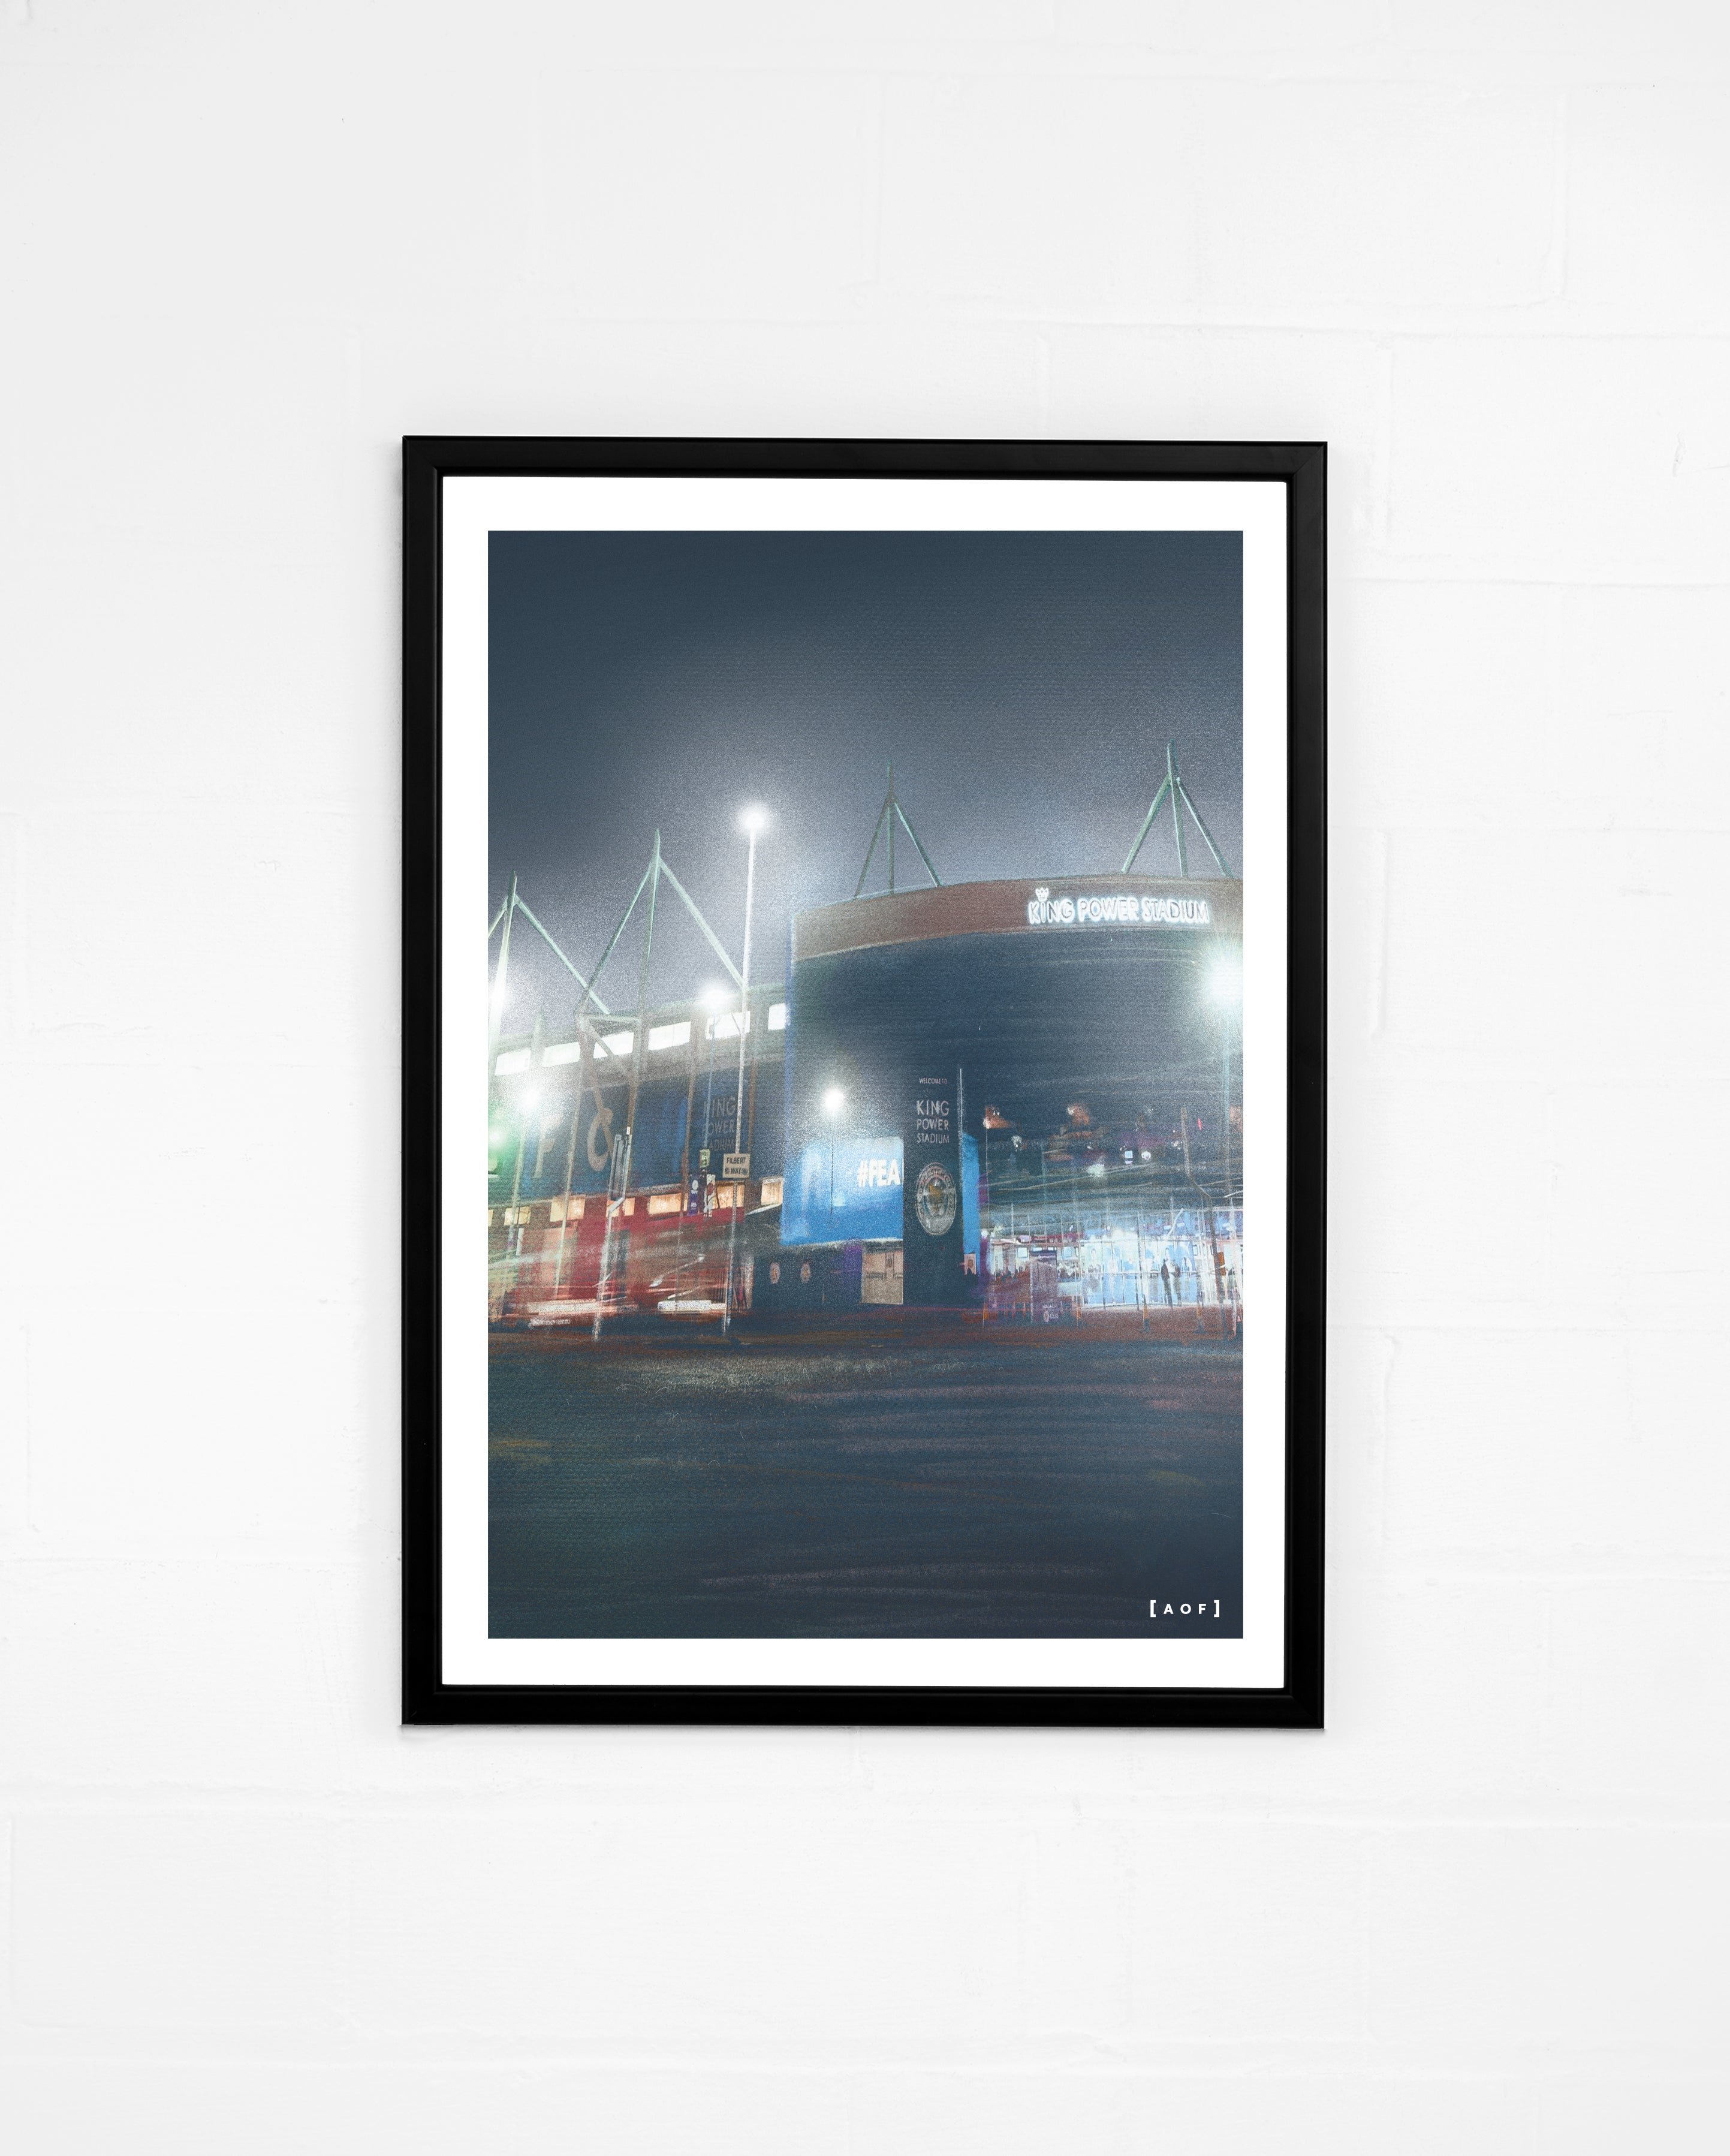 King Power Stadium by Night - Print